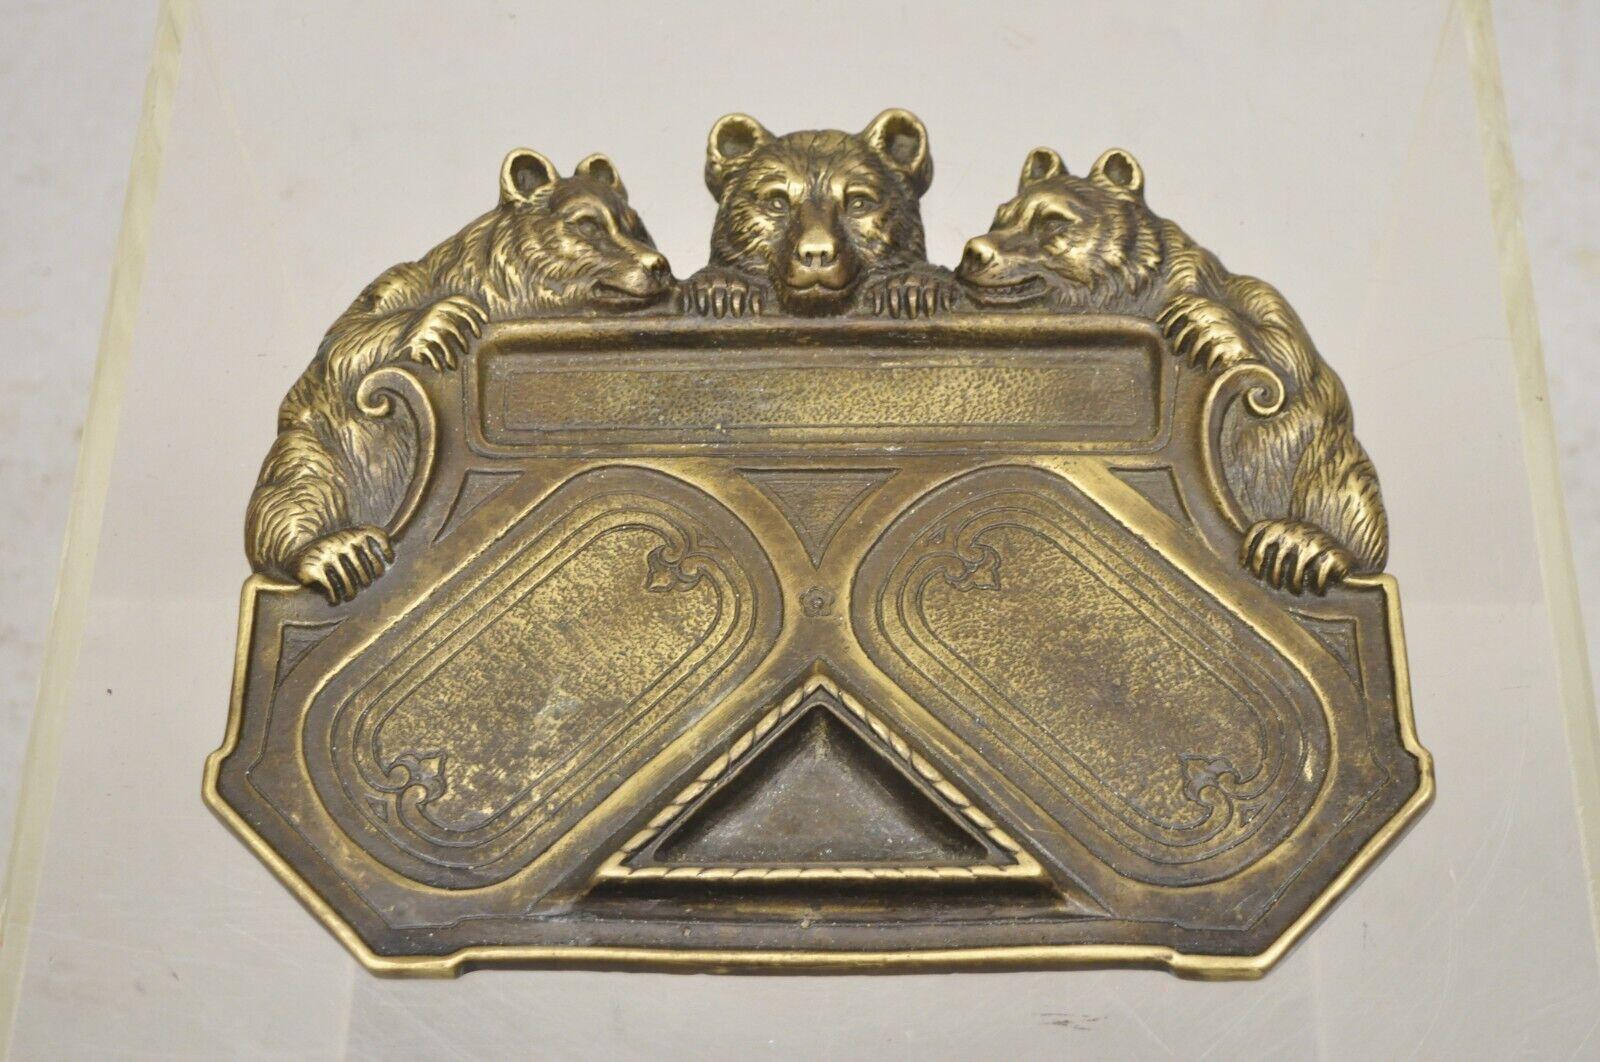 Antique Brass Bronze Black Forest Figural 3 Bears Desk Pen Tray Trinket Holder. Circa Mid 20th Century. Measurements: 1.5